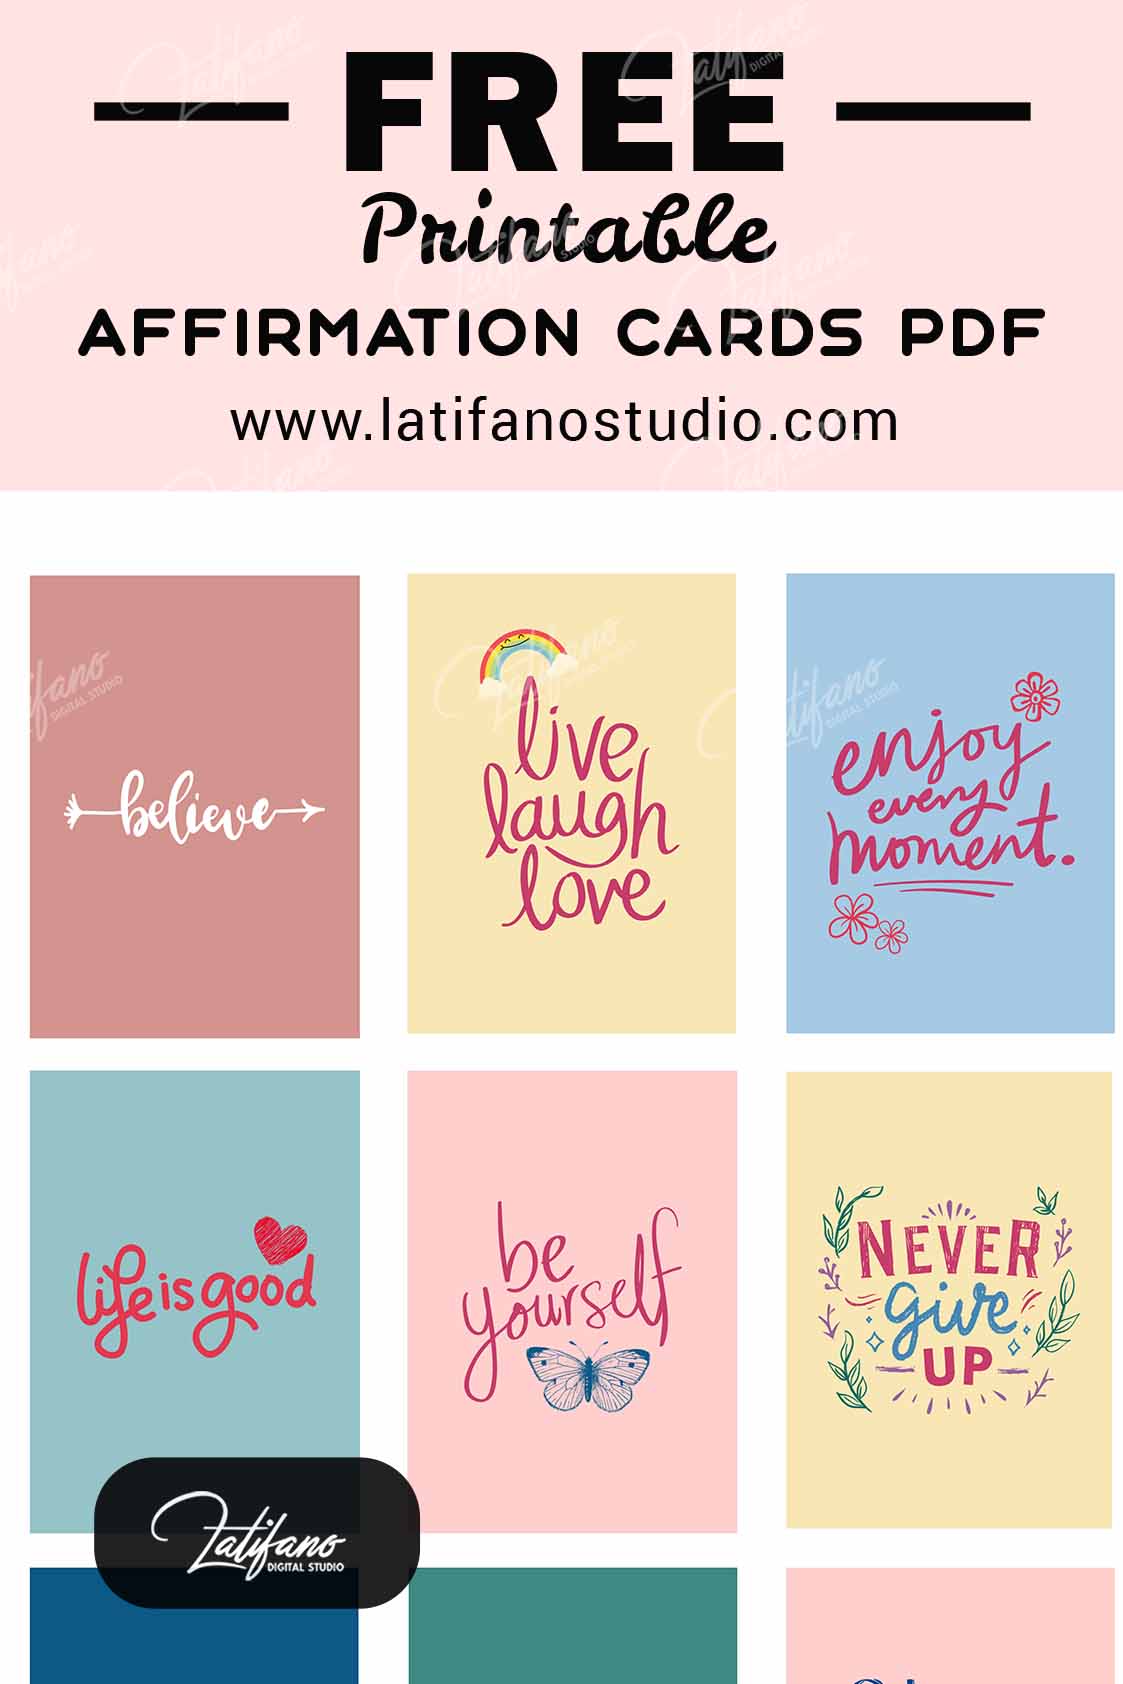 Free printable Self Love affirmation cards